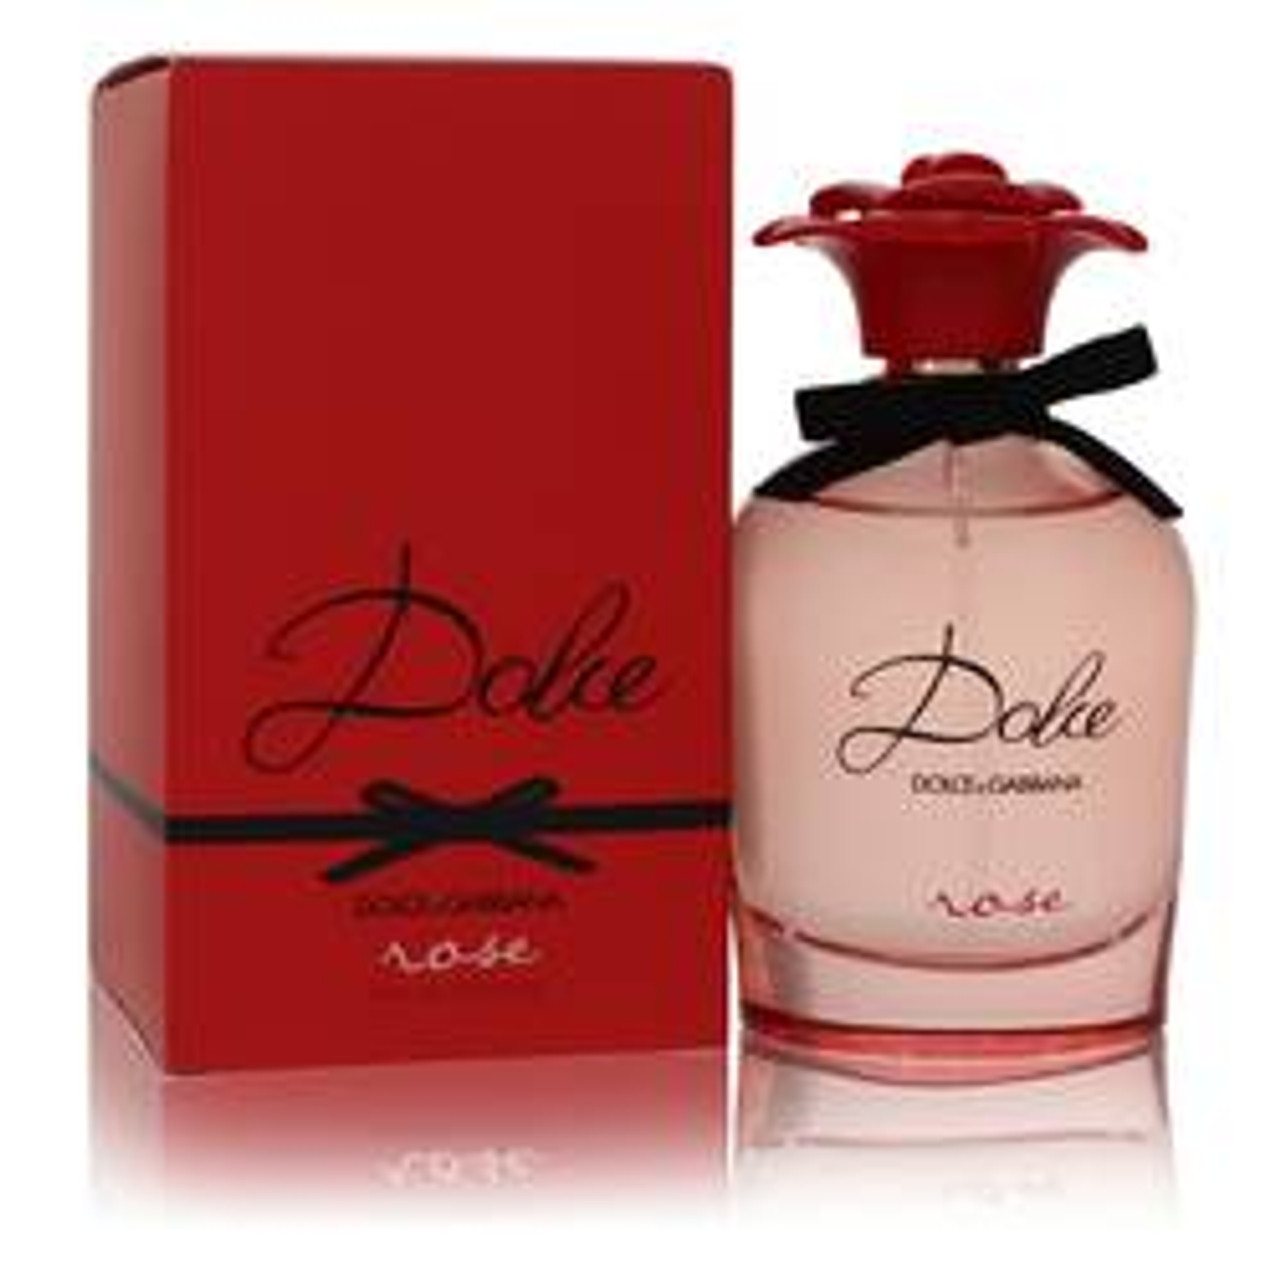 Dolce Rose Perfume By Dolce & Gabbana Eau De Toilette Spray 2.5 oz for Women - *Pre-Order